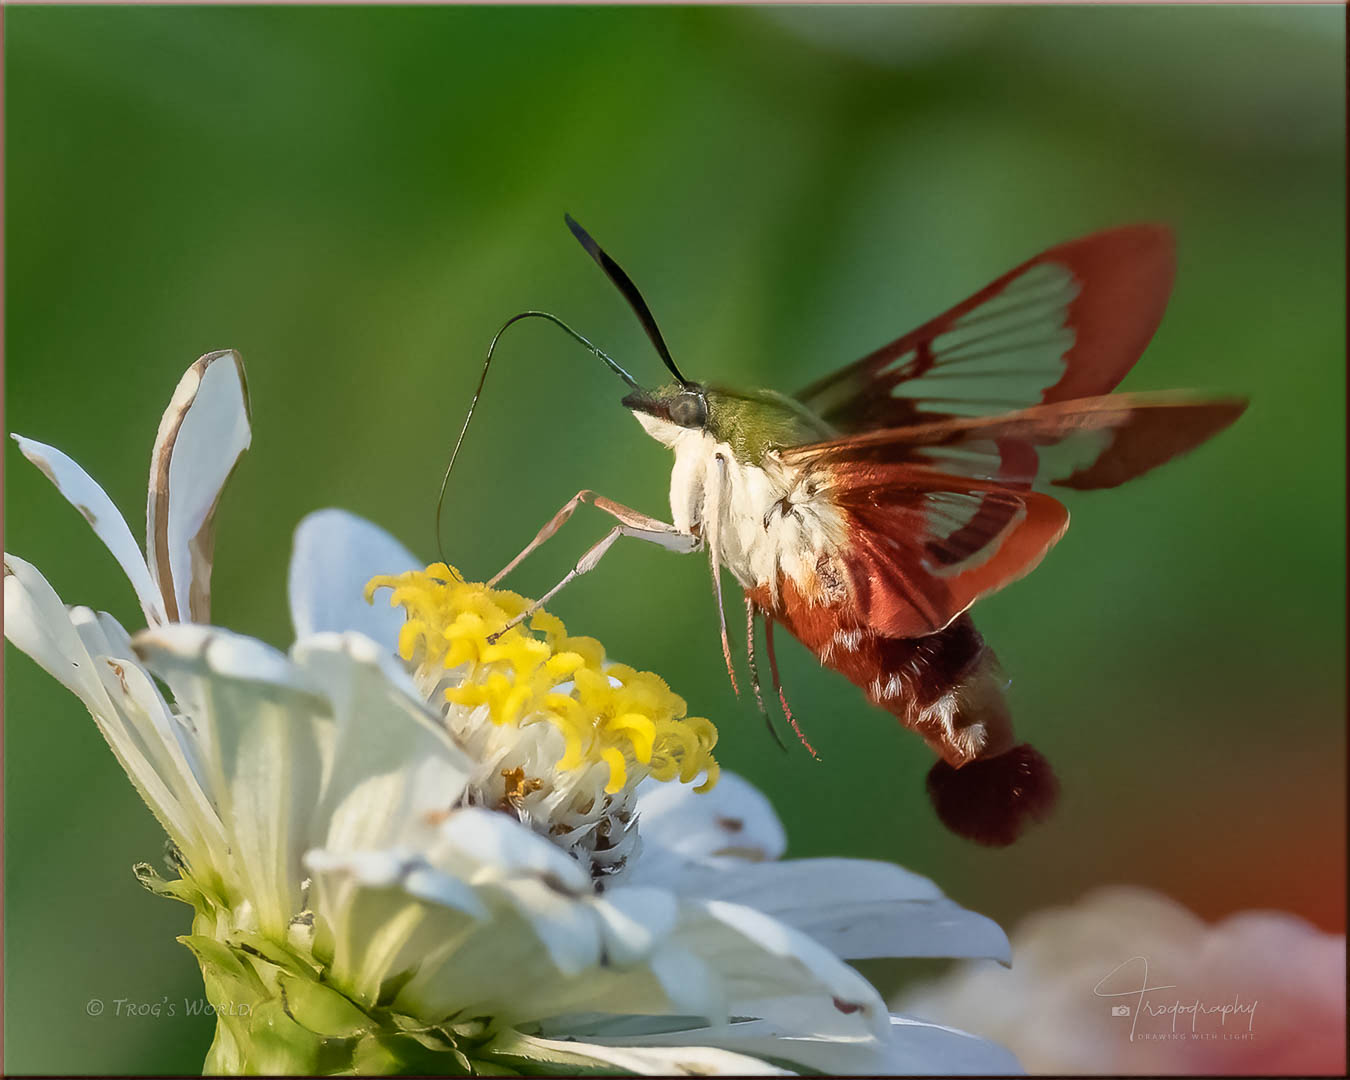 Clearwing Hummingbird Moth on a flower